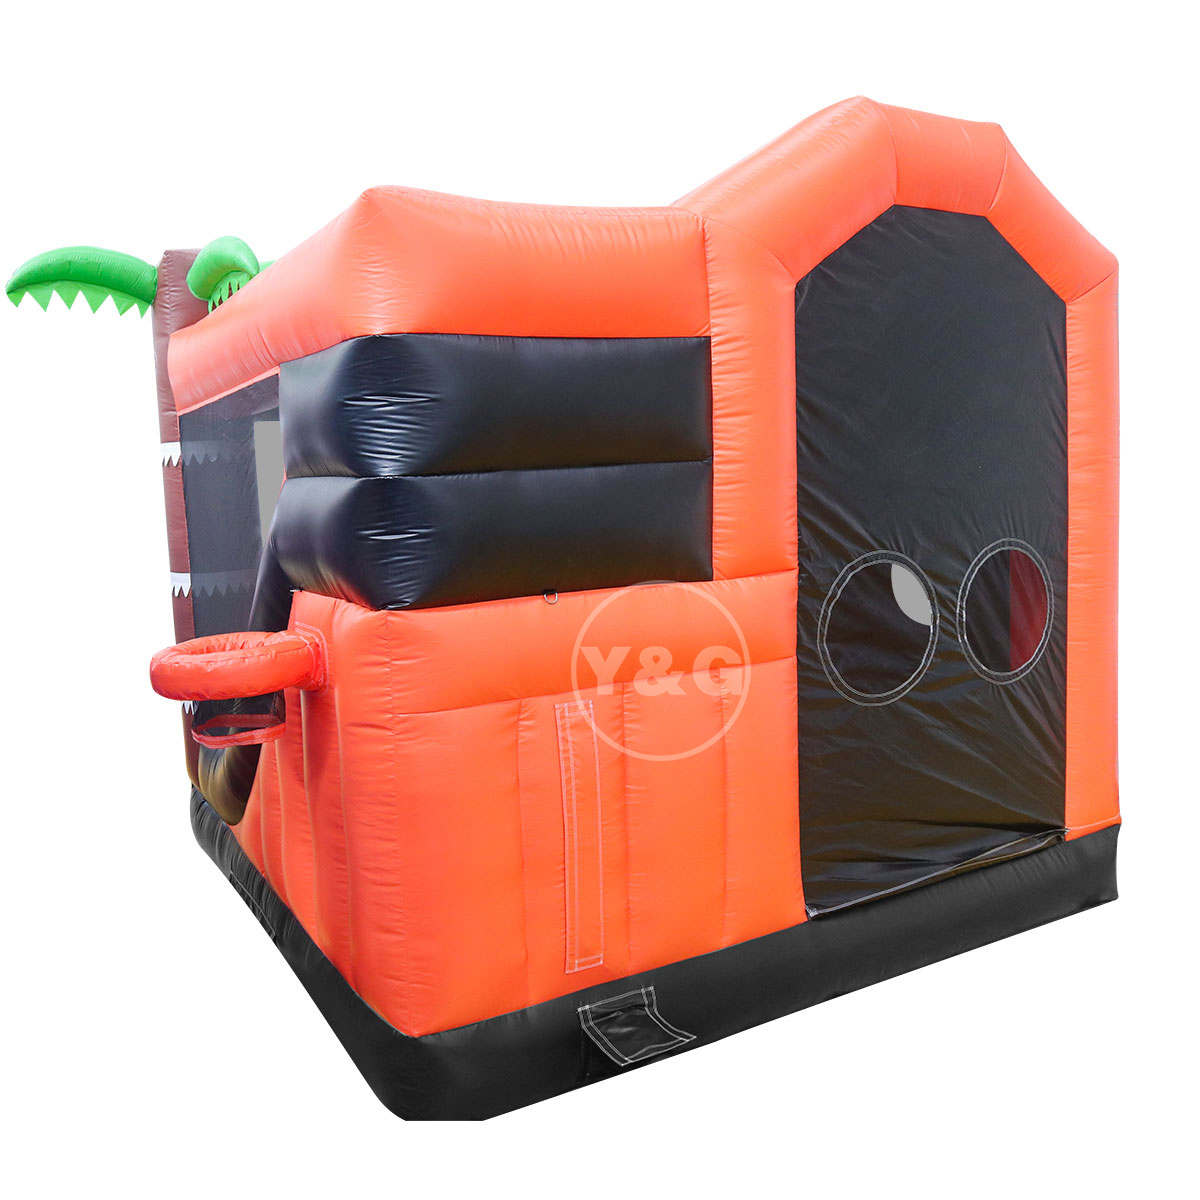 inflatable tiger park bounce houseYG-143